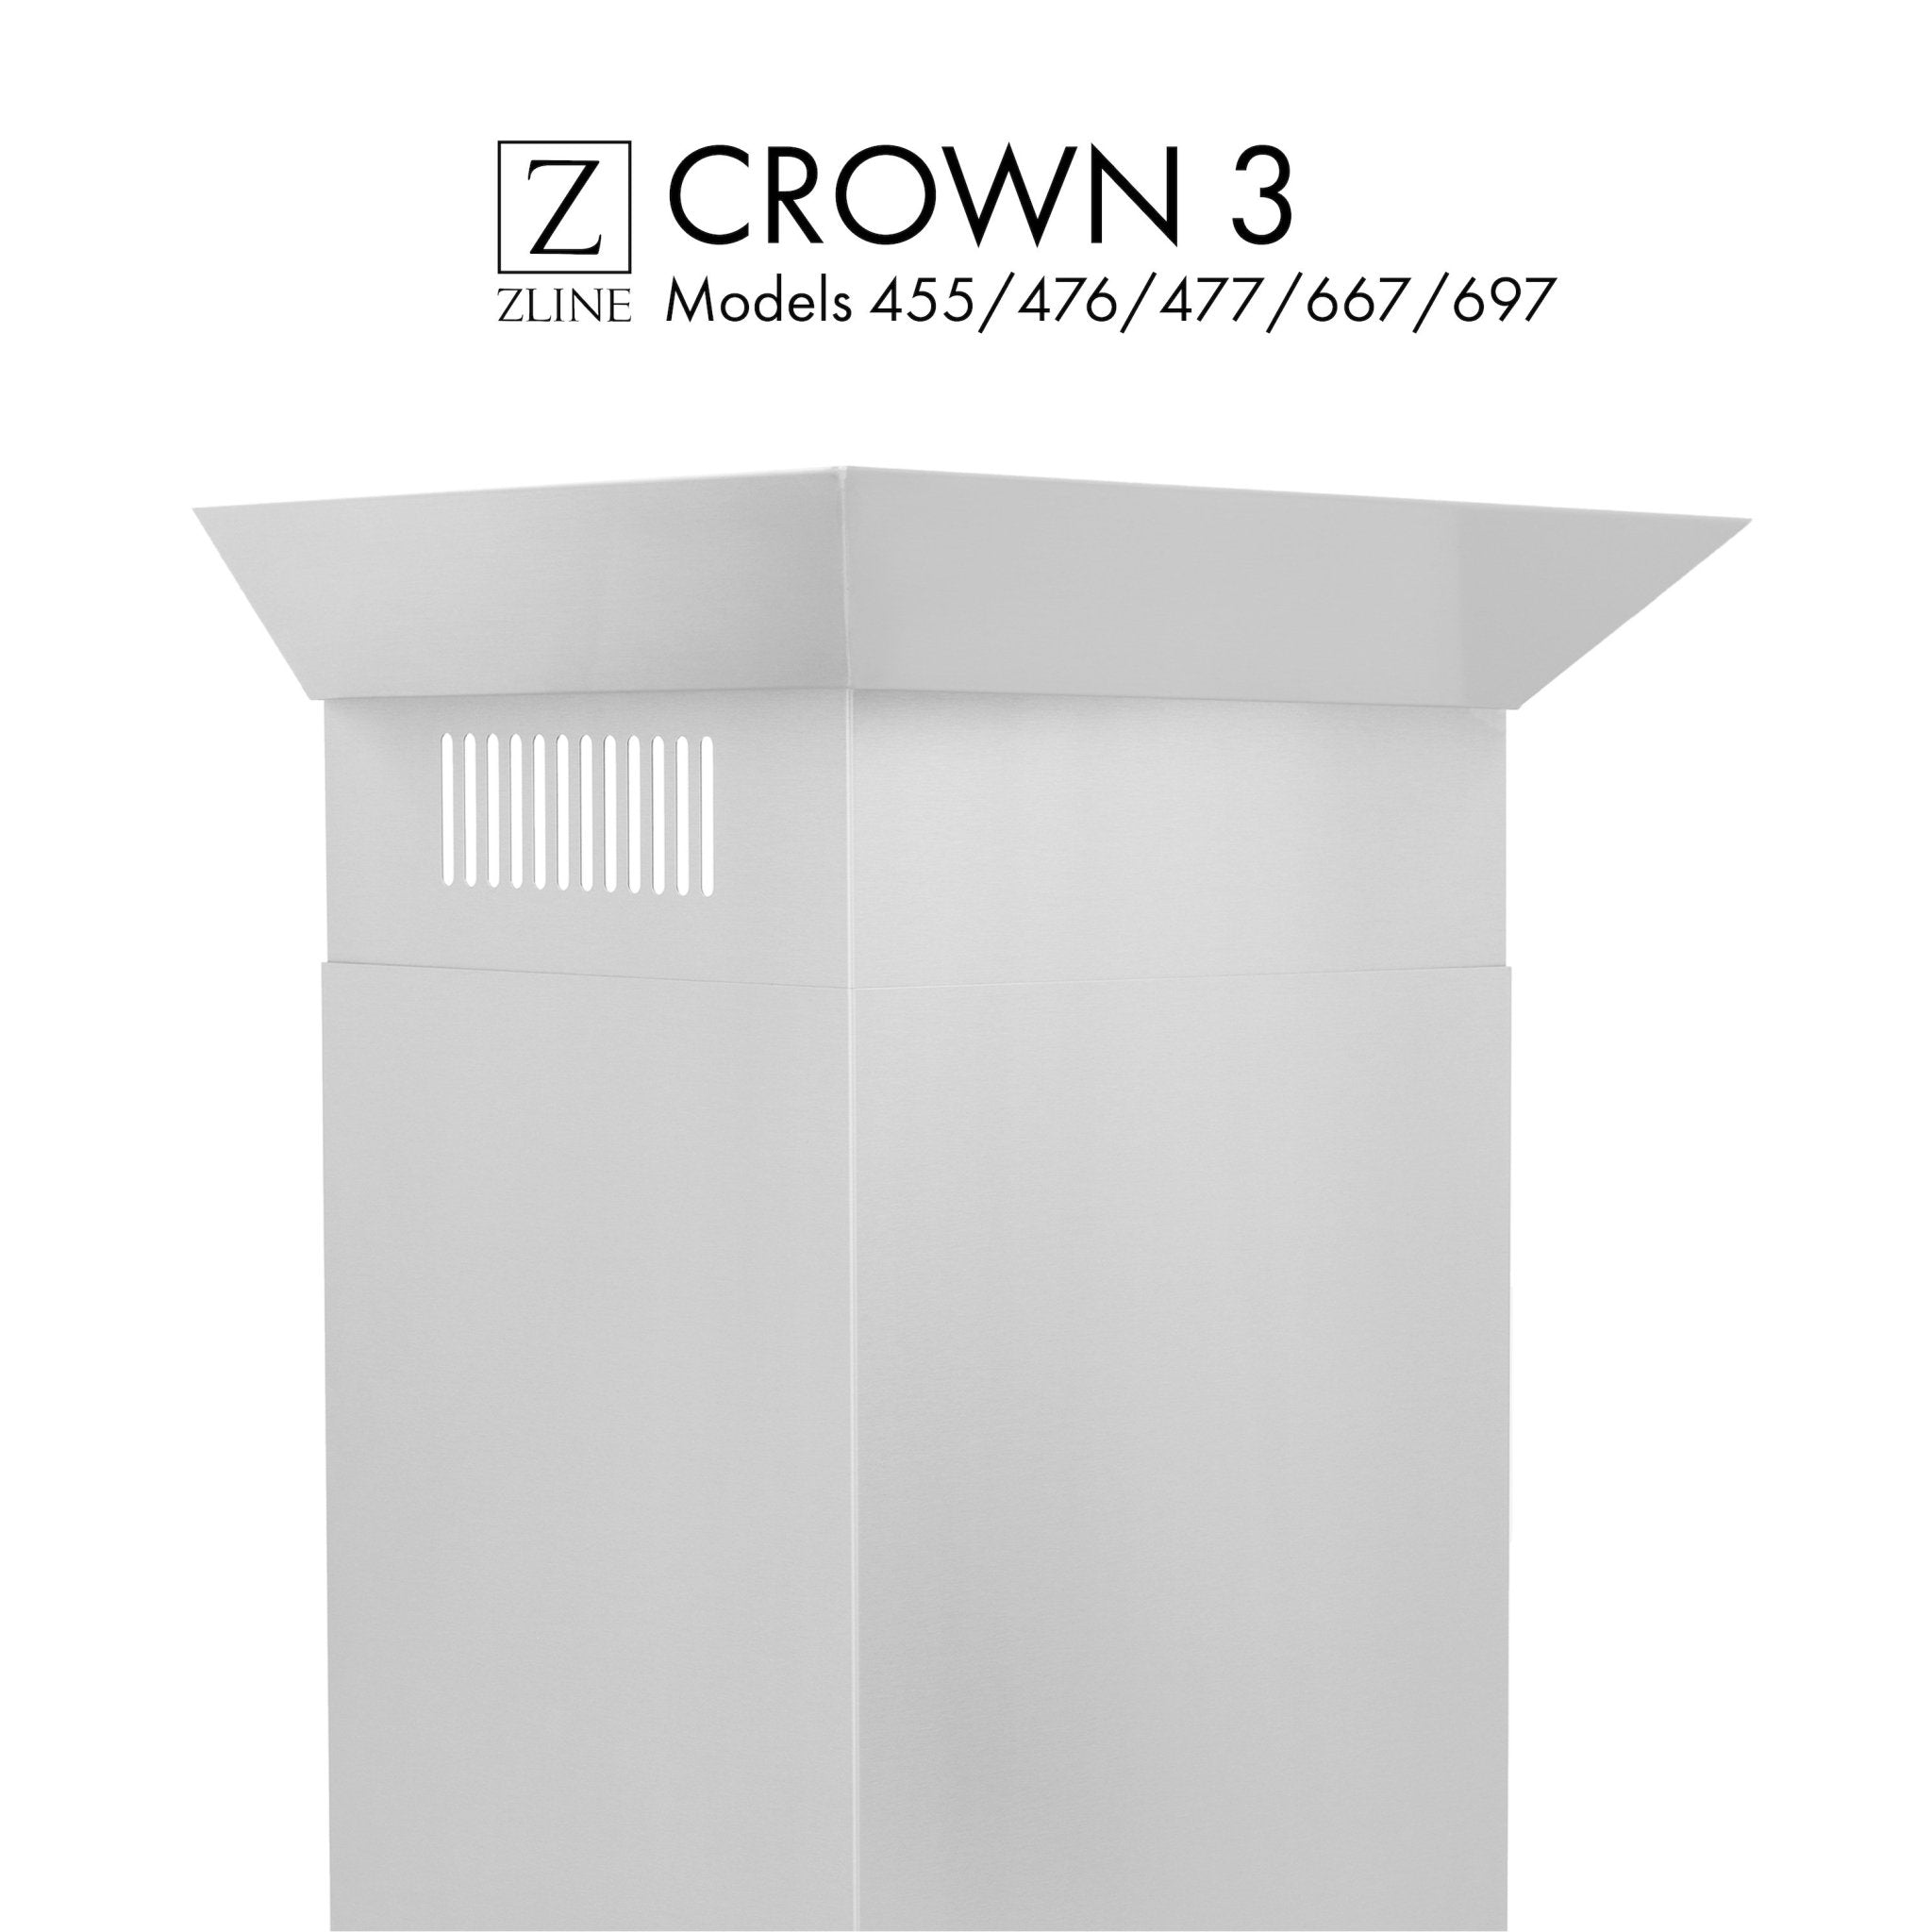 ZLINE Crown Molding #3 For Wall Range Hood (CM3-455/476/477/667/697) - Rustic Kitchen & Bath - Range Hood Accessories - ZLINE Kitchen and Bath